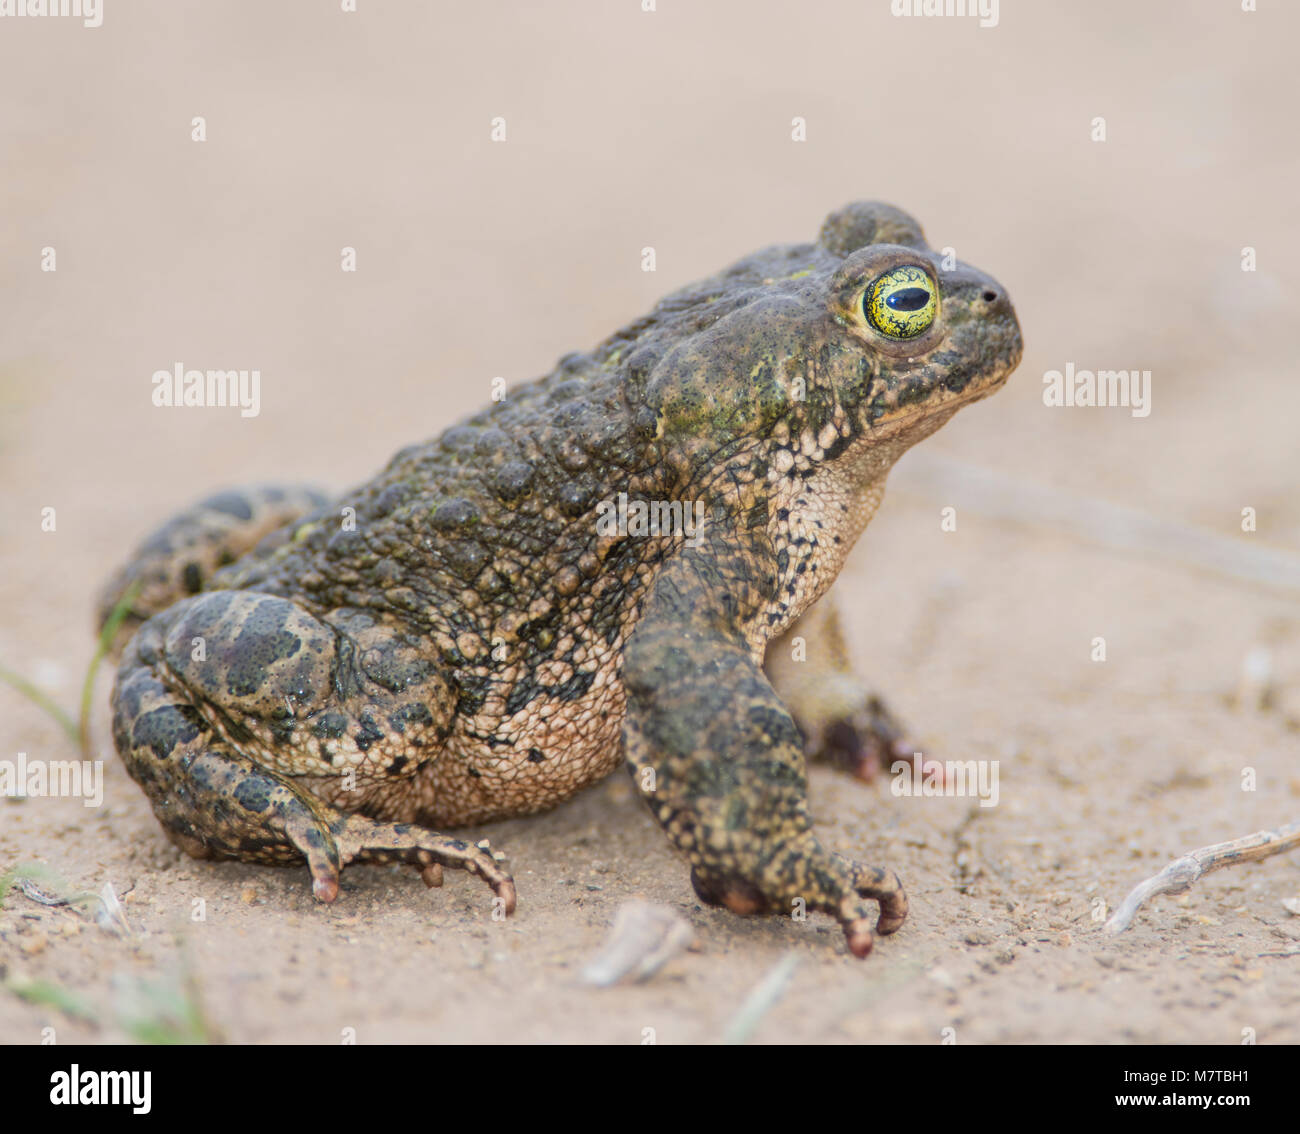 Natterjack Toad (Epidalea calamita) sand on sandy soil in Northern Spain. Stock Photo